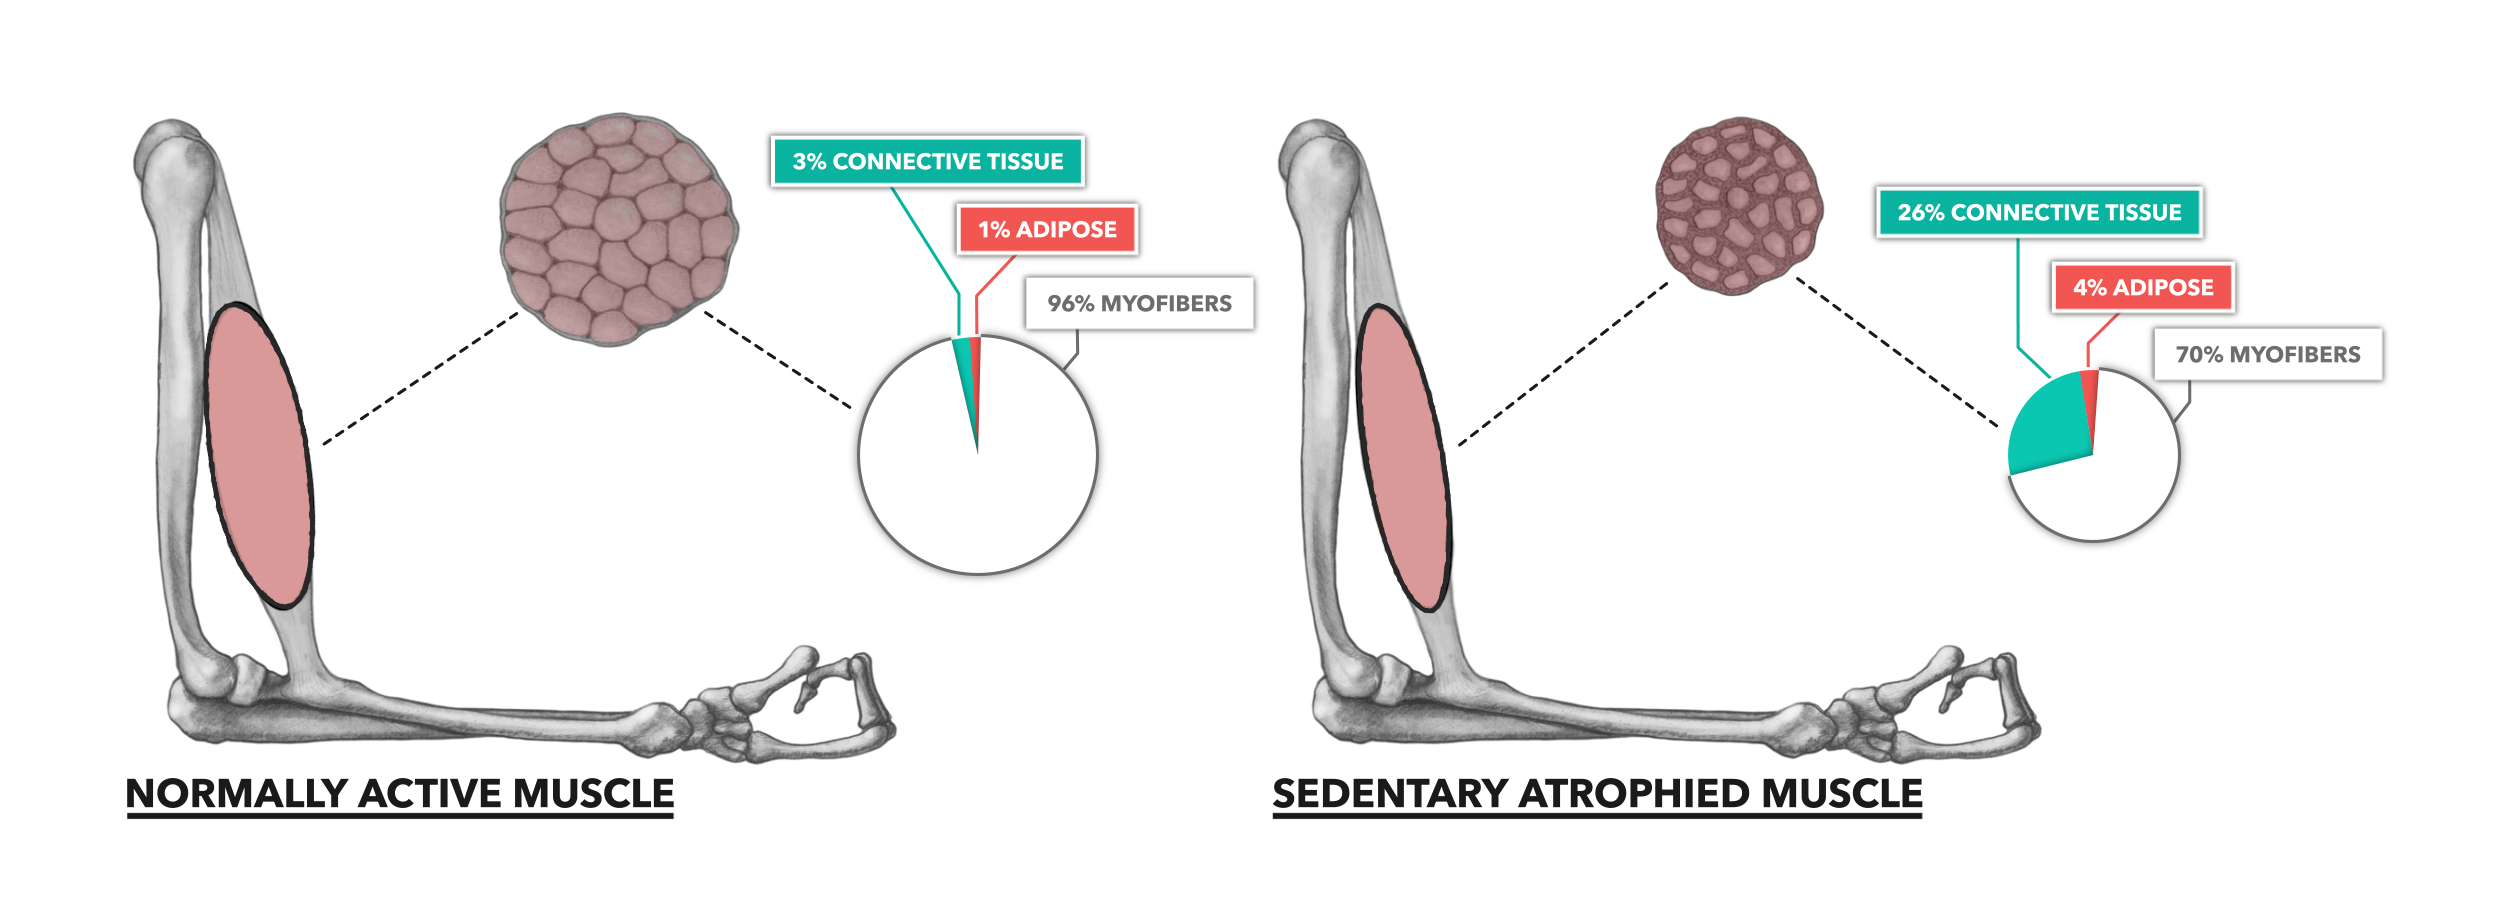 CrossFit | Muscle Basics, Part 4: Atrophy & Sarcopenia